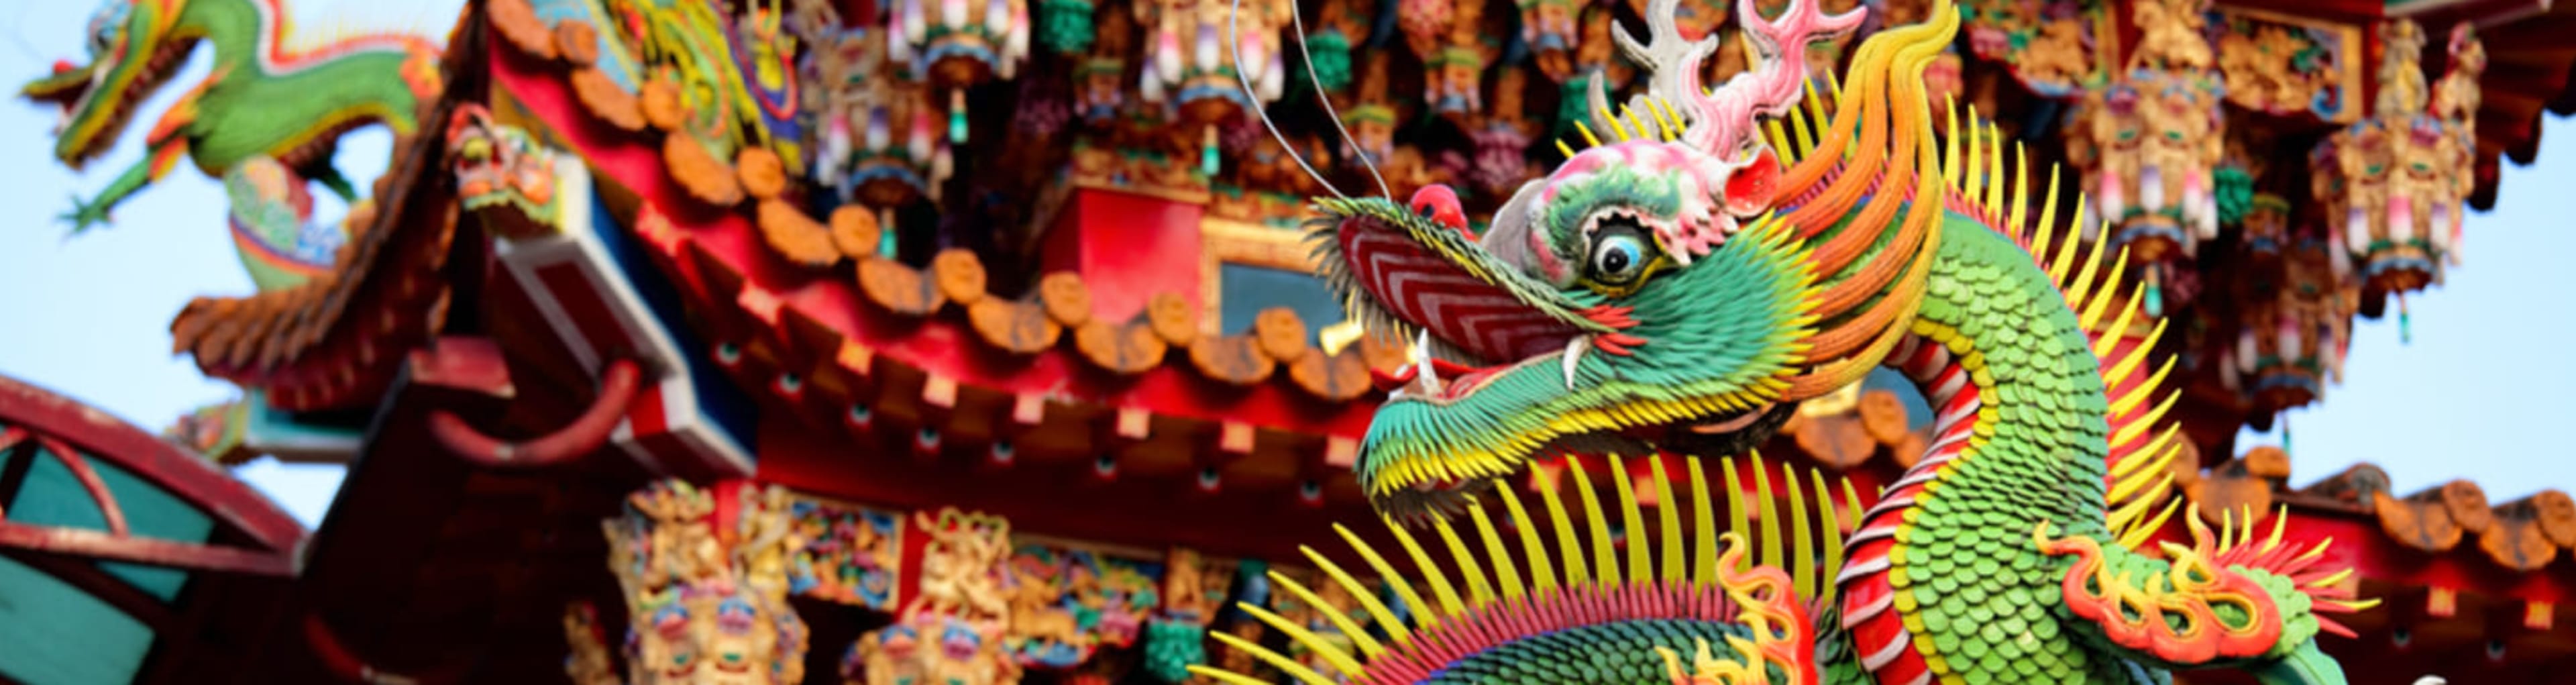 Colorful dragon statue in Bangkok's Chinatown.